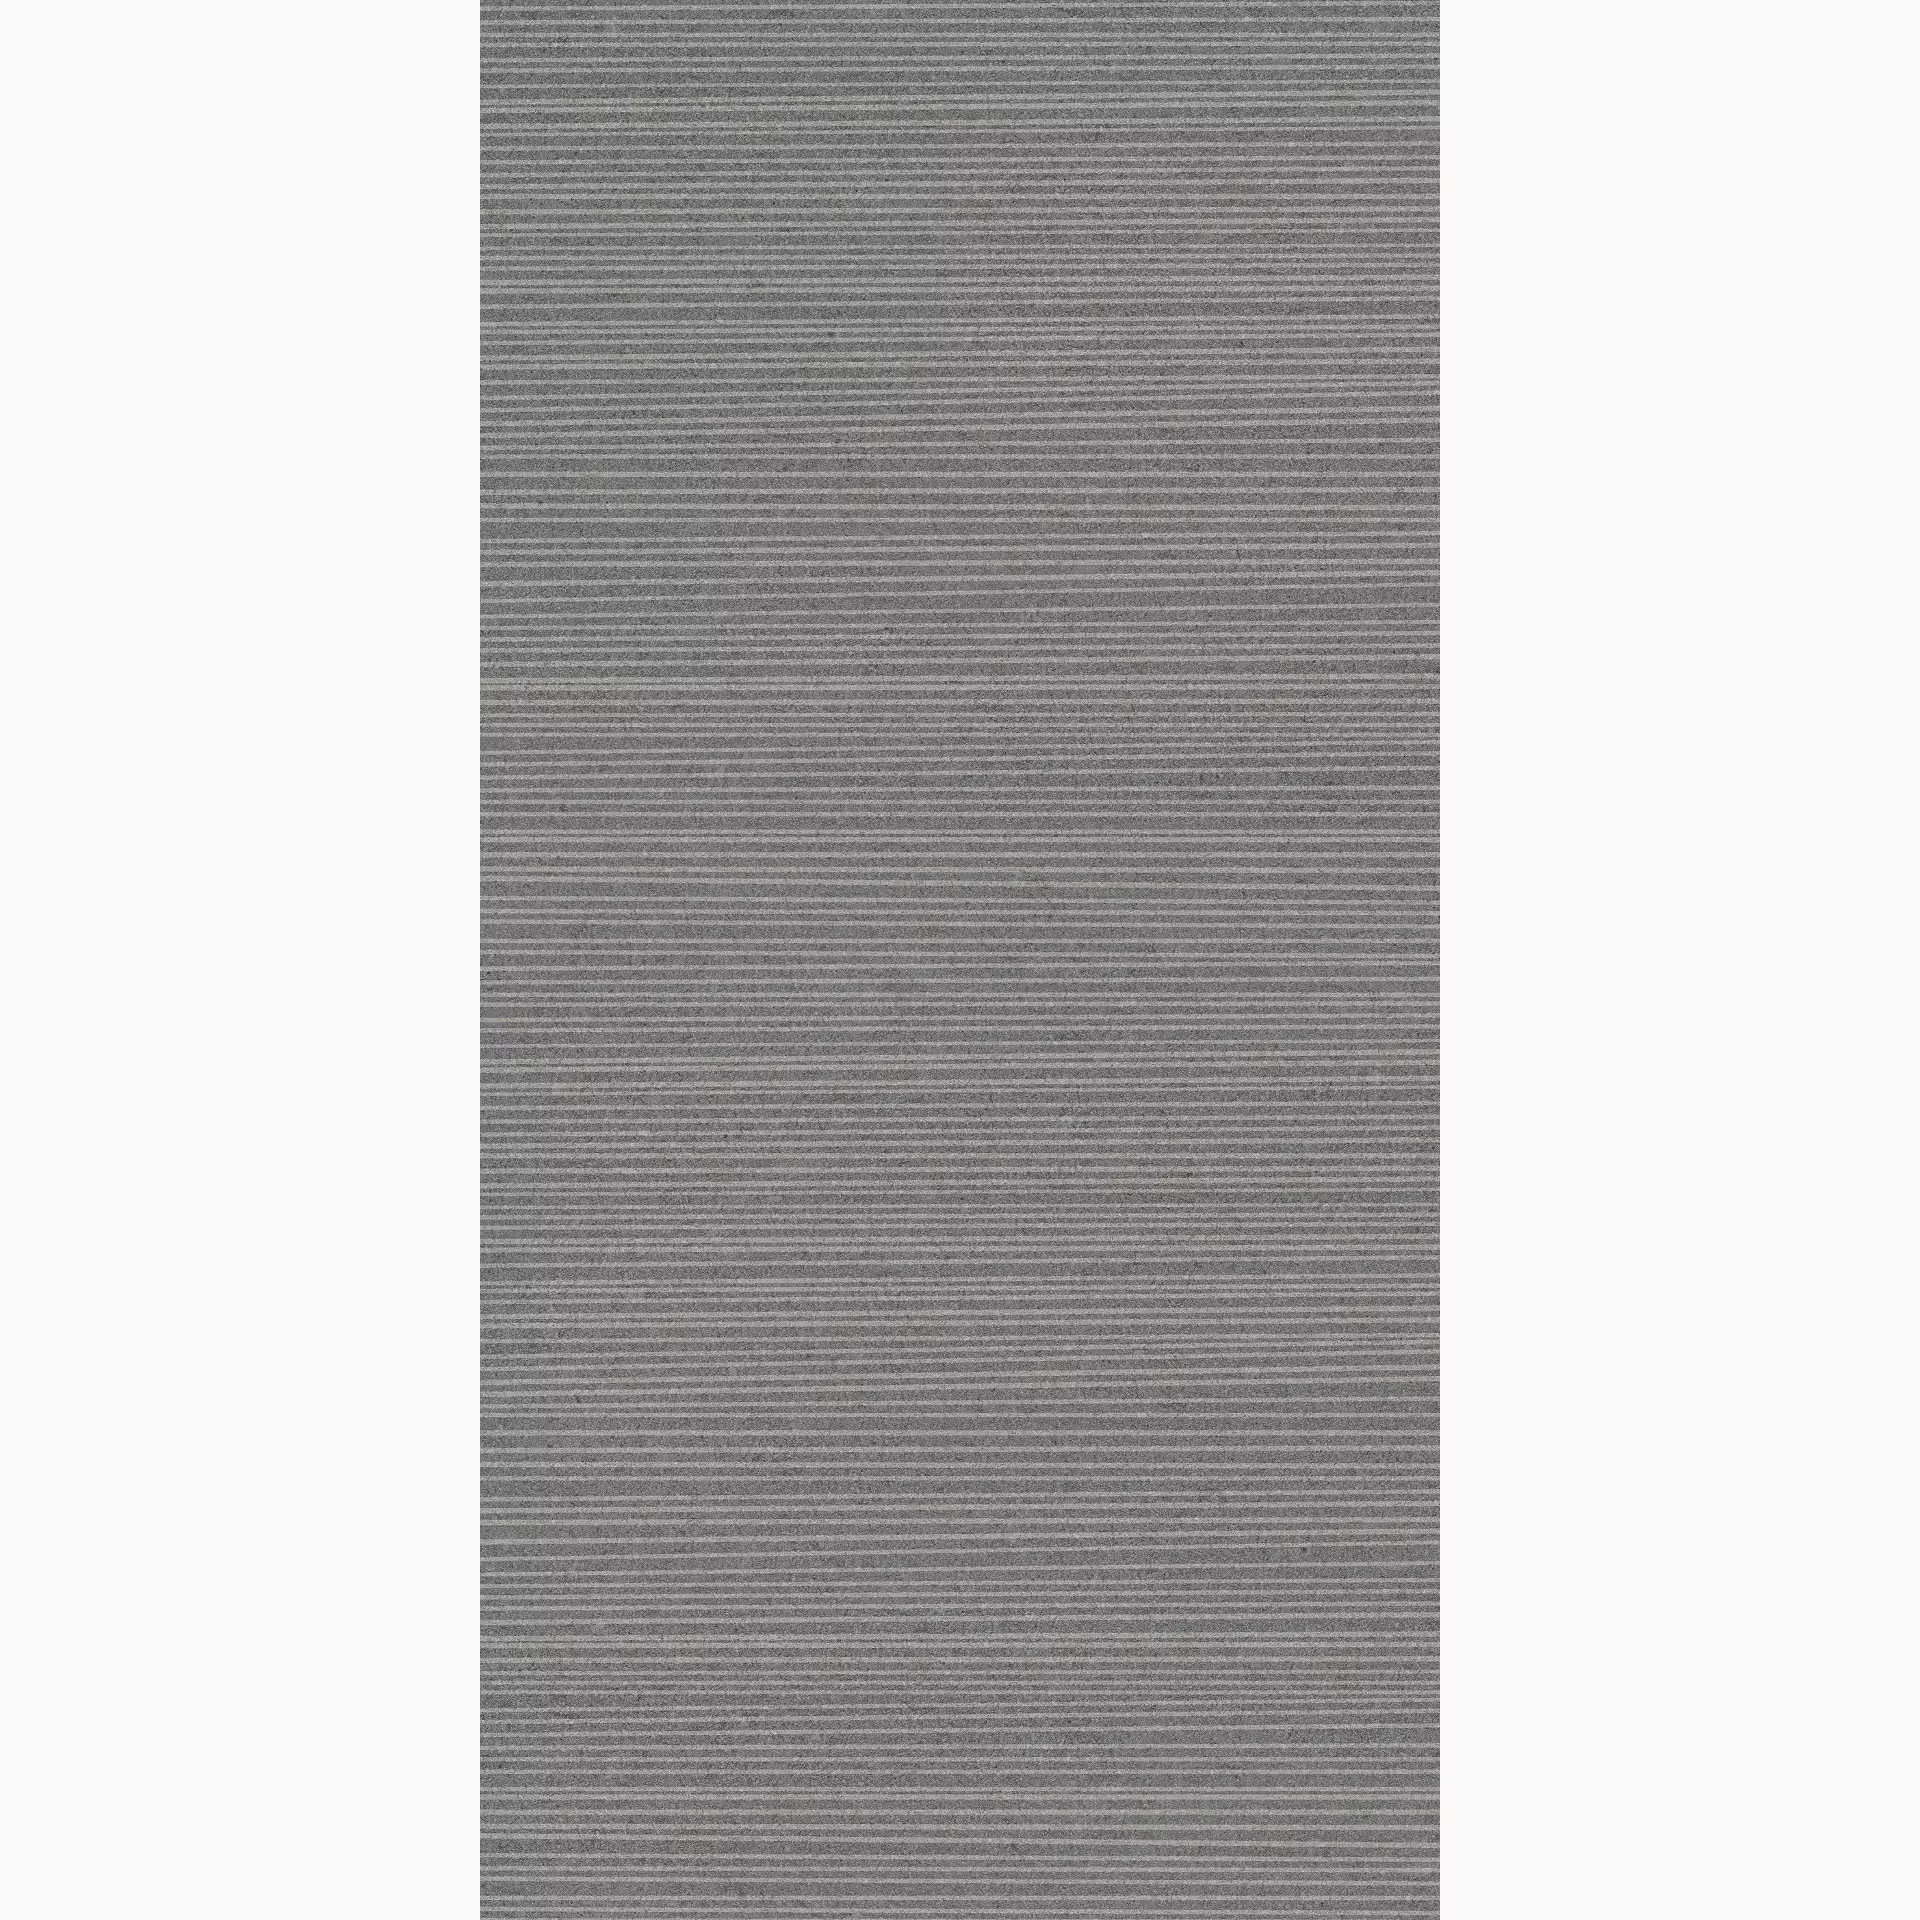 Coem Tweed Stone Graphite Naturale 0TW360R 30x60cm rectified 9mm